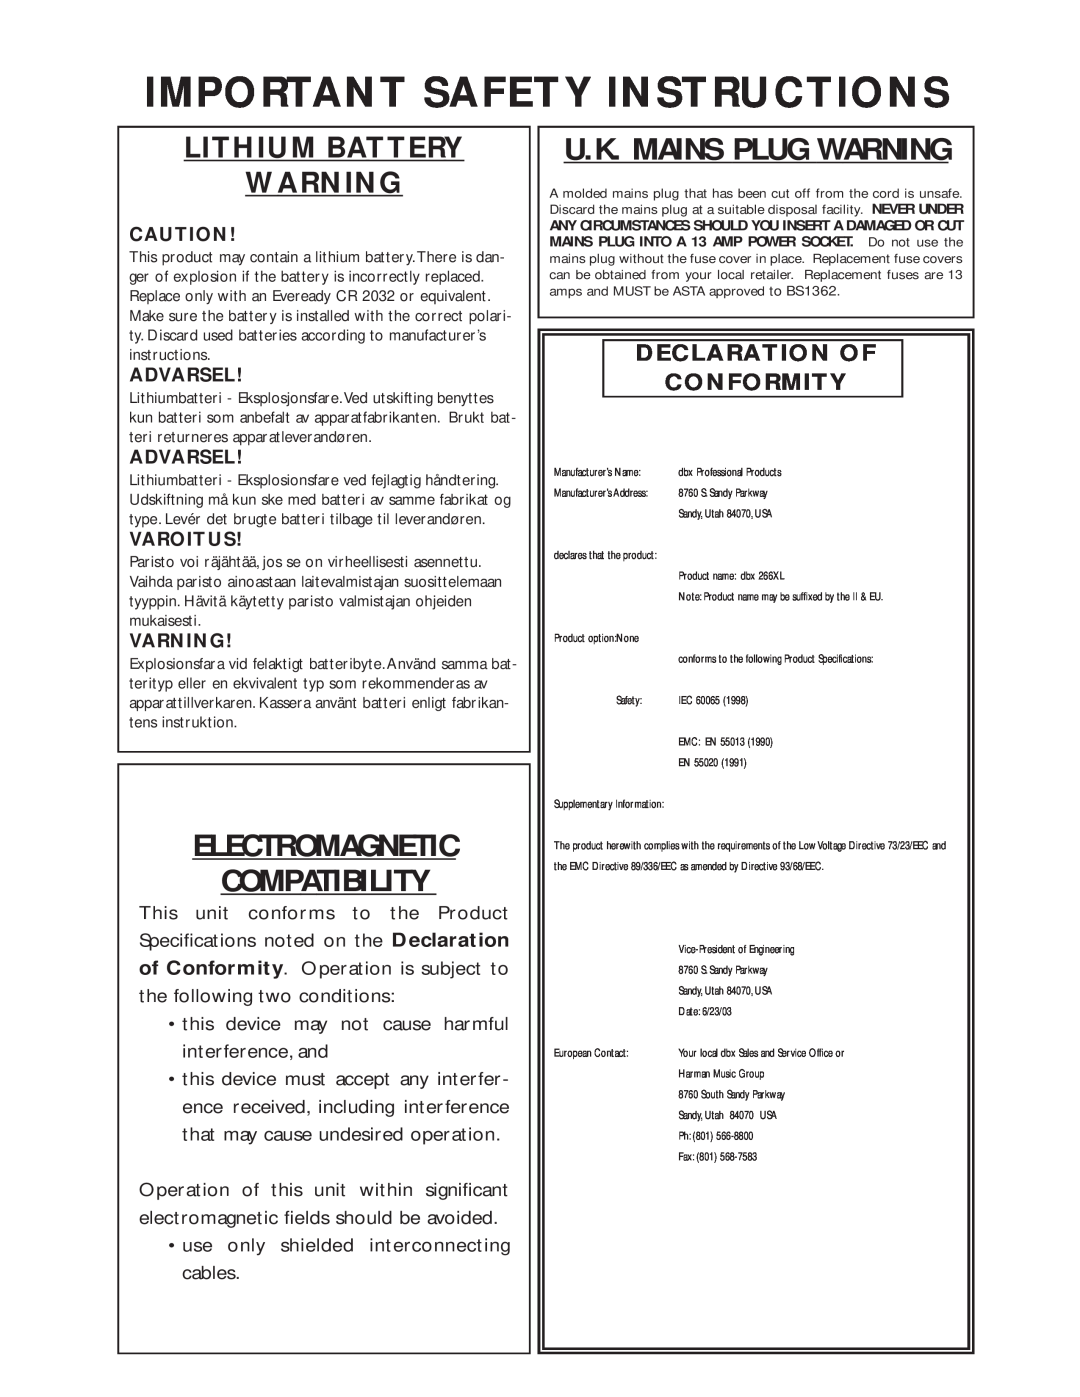 dbx Pro 266XL Important Safety Instructions, Lithium Battery, Electromagnetic Compatibility, U.K. Mains Plug Warning 